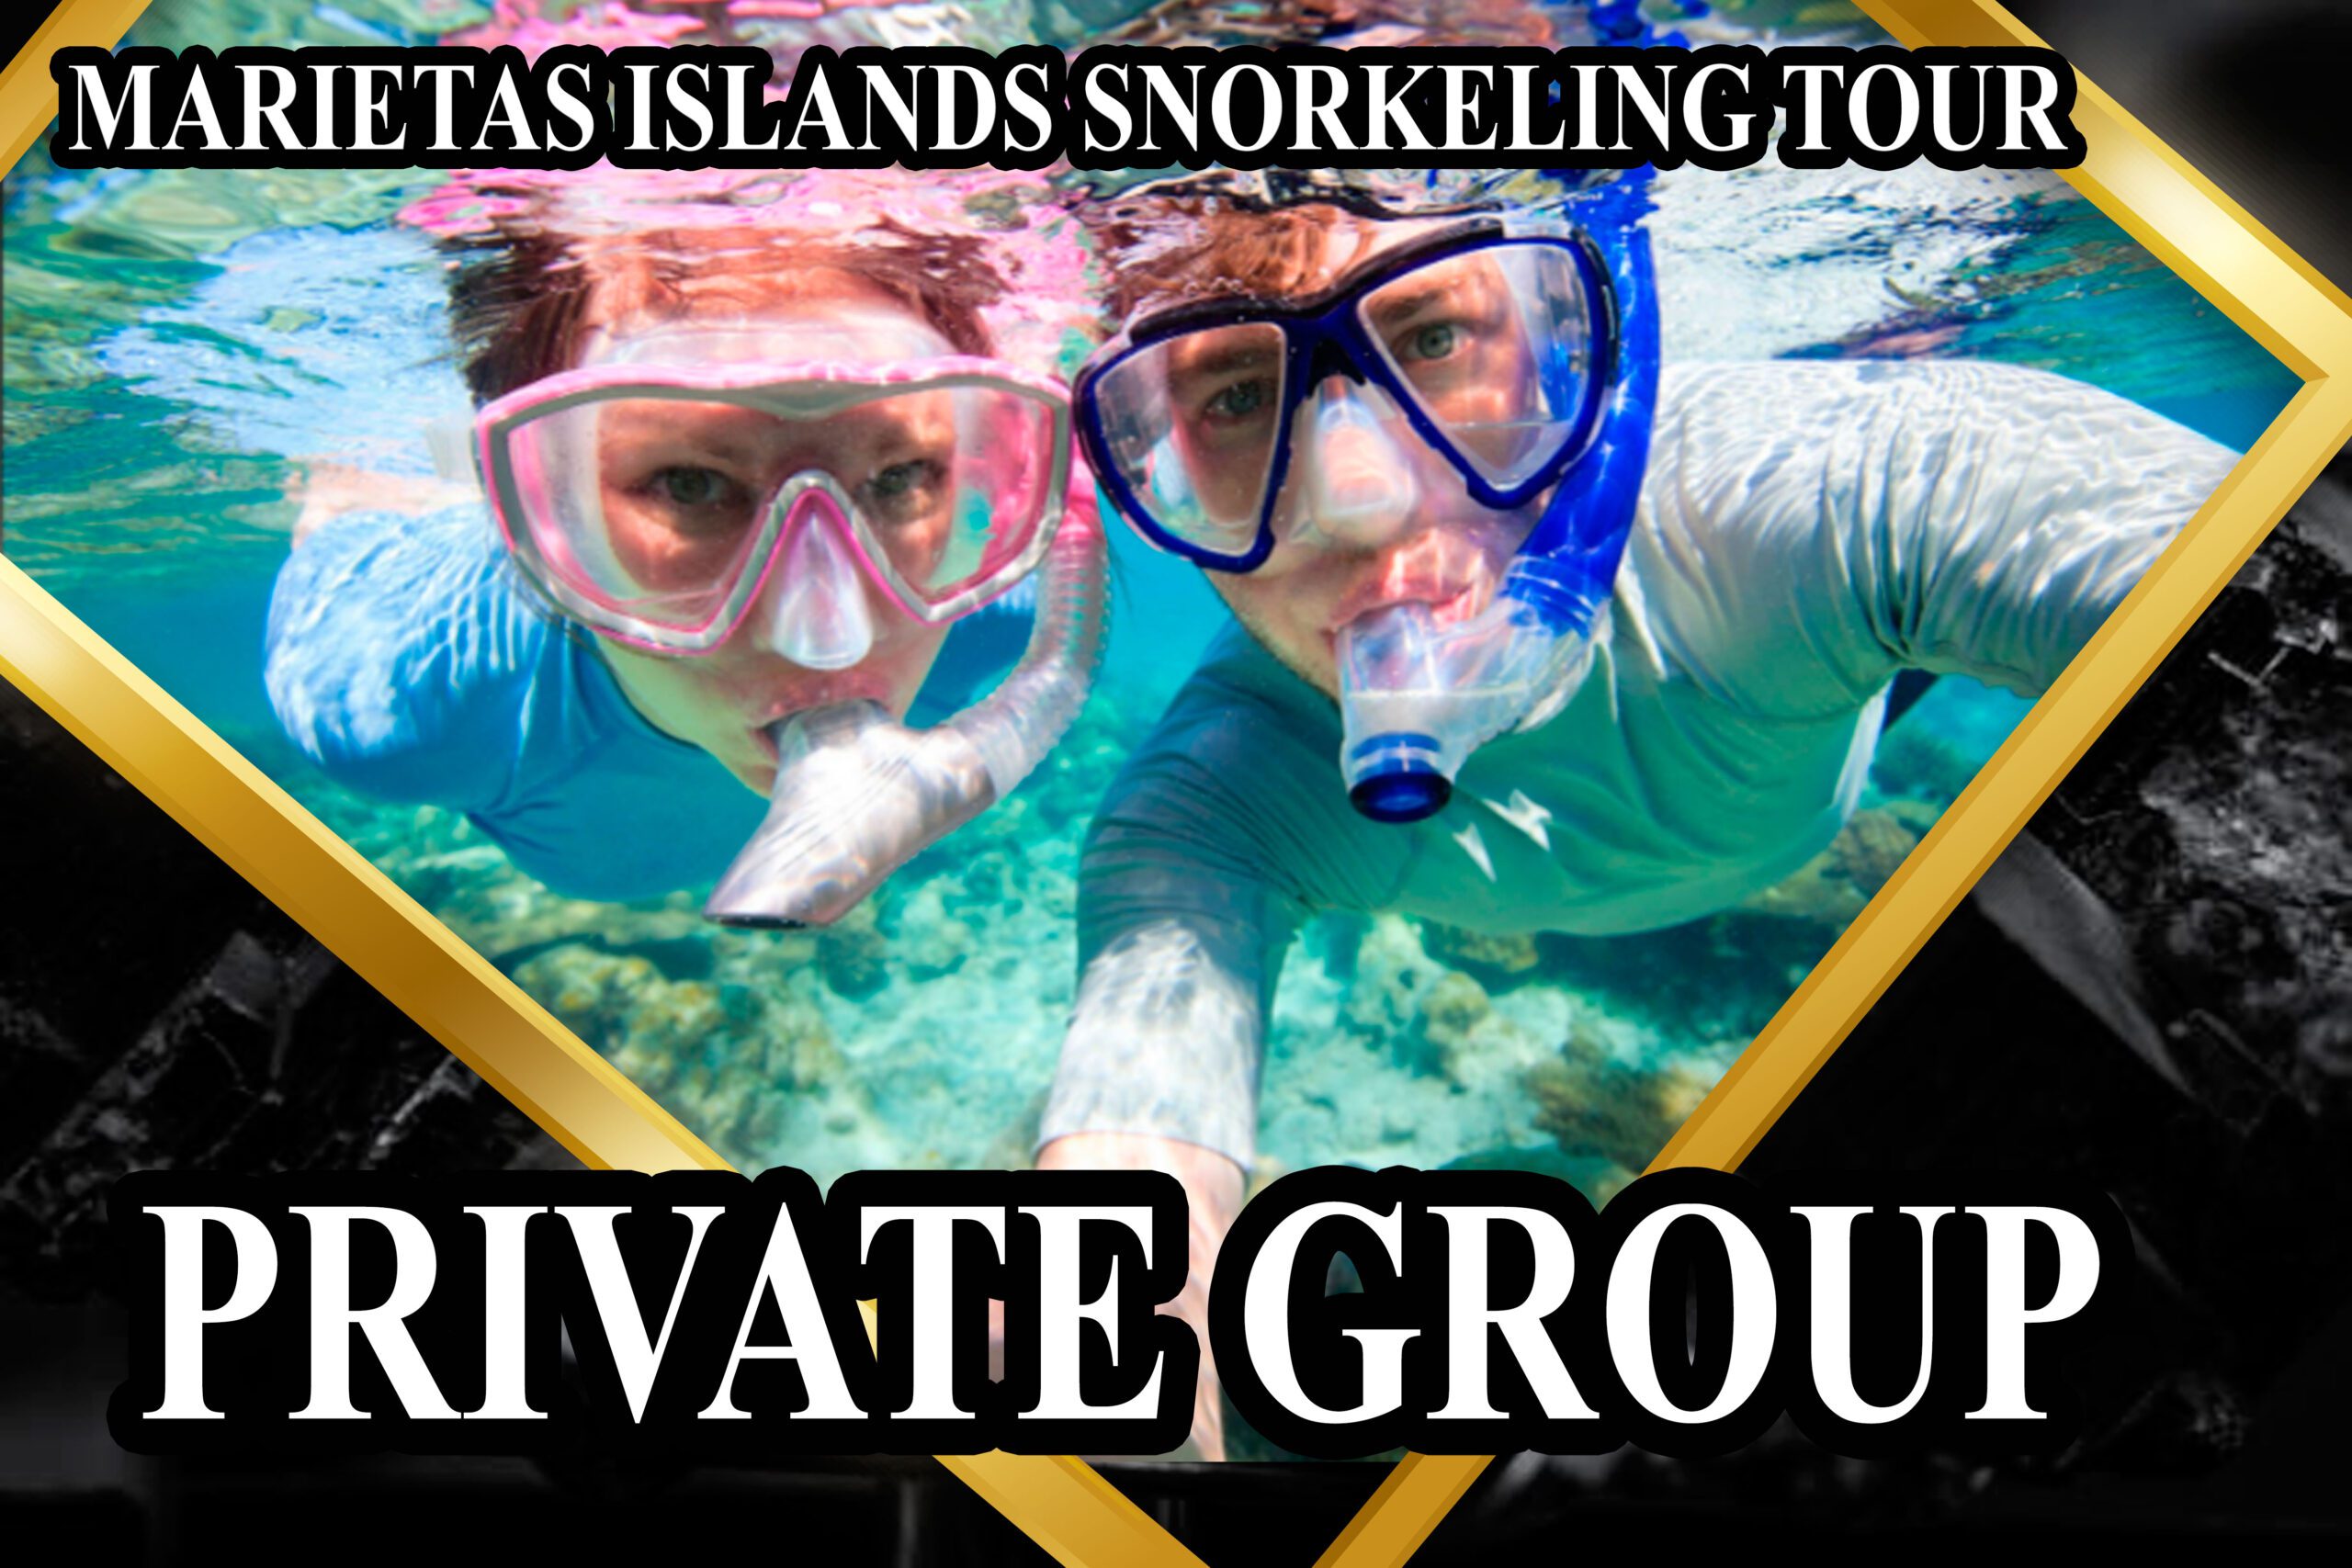 Marietas Islands Snorkeling Tour - Private Group 3 People